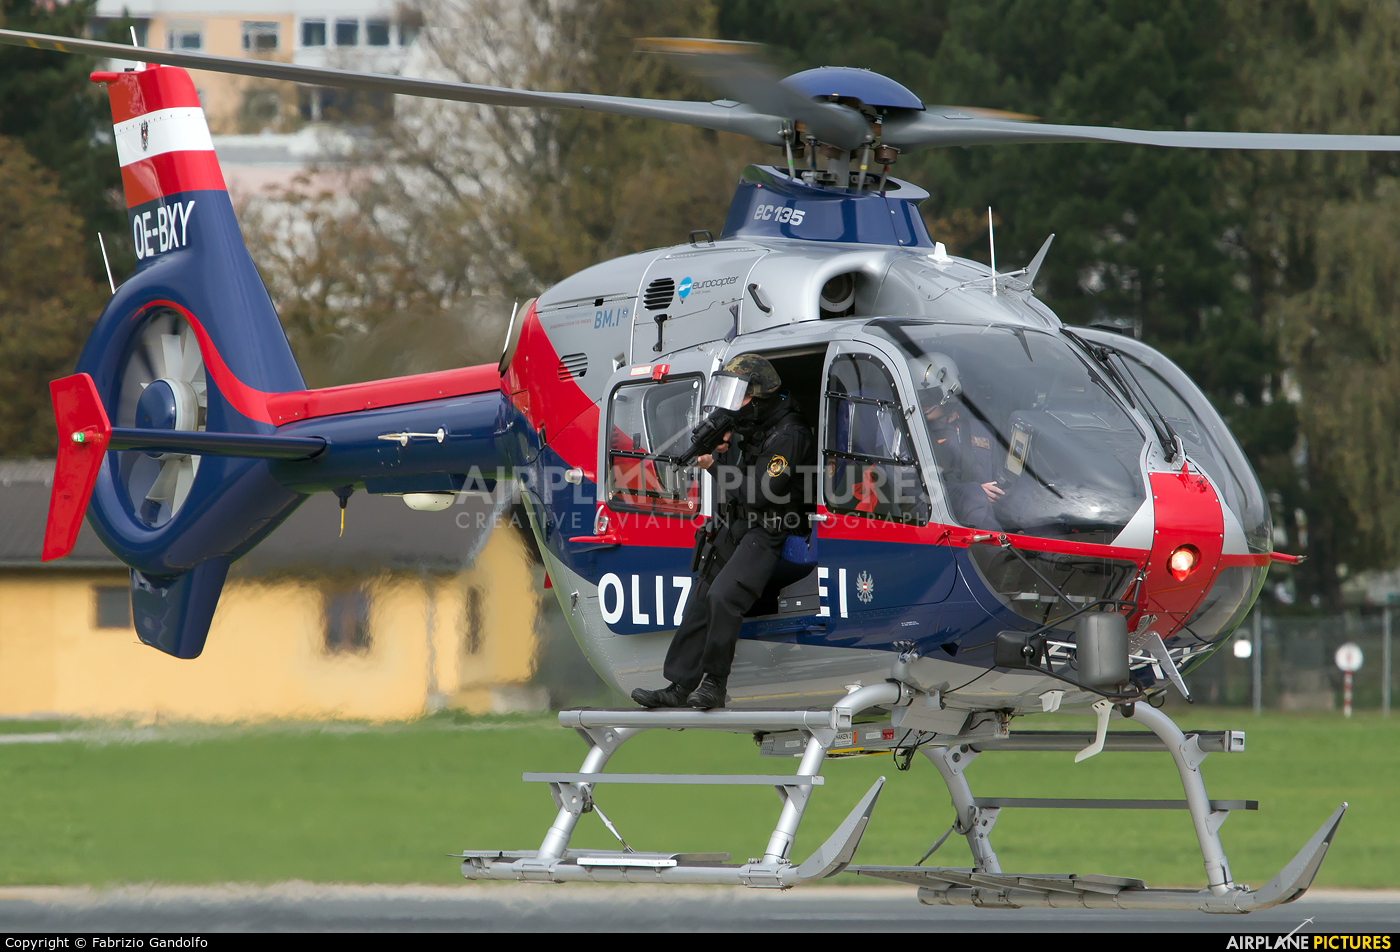 Austria - Police OE-BXY aircraft at Innsbruck